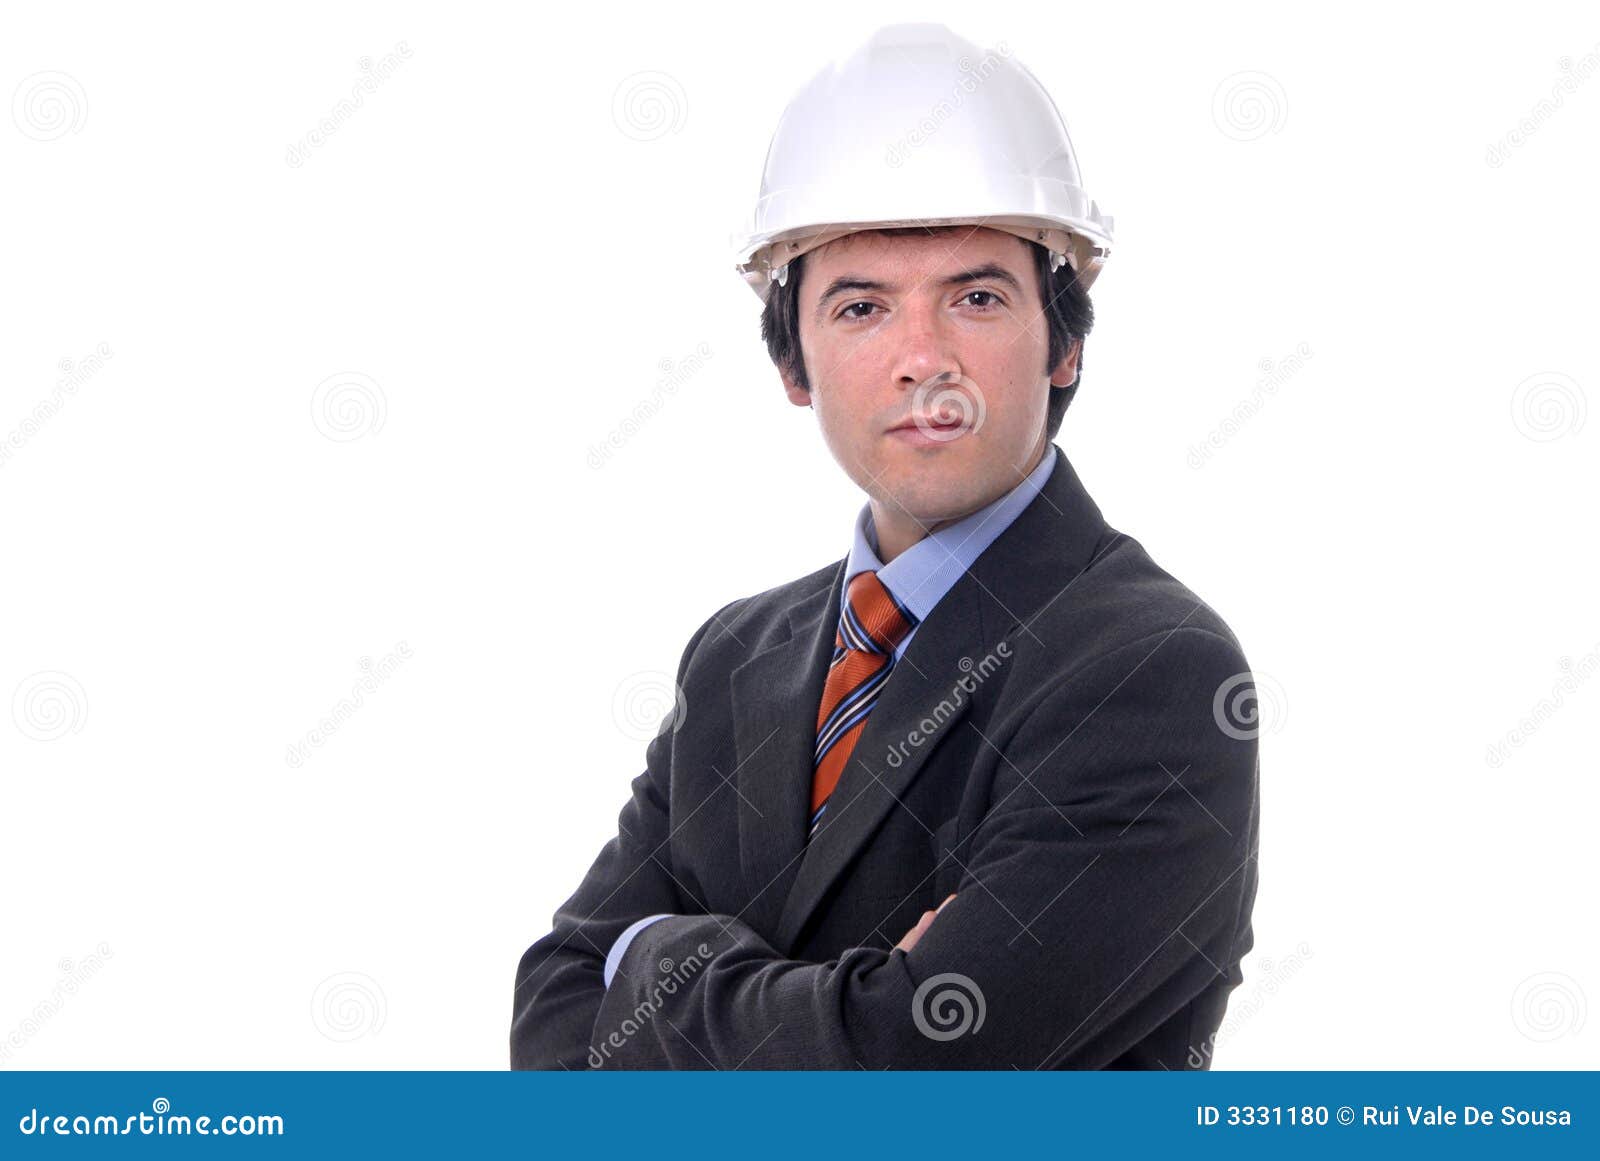 Engineer stock photo. Image of leadership, male, achievement - 3331180